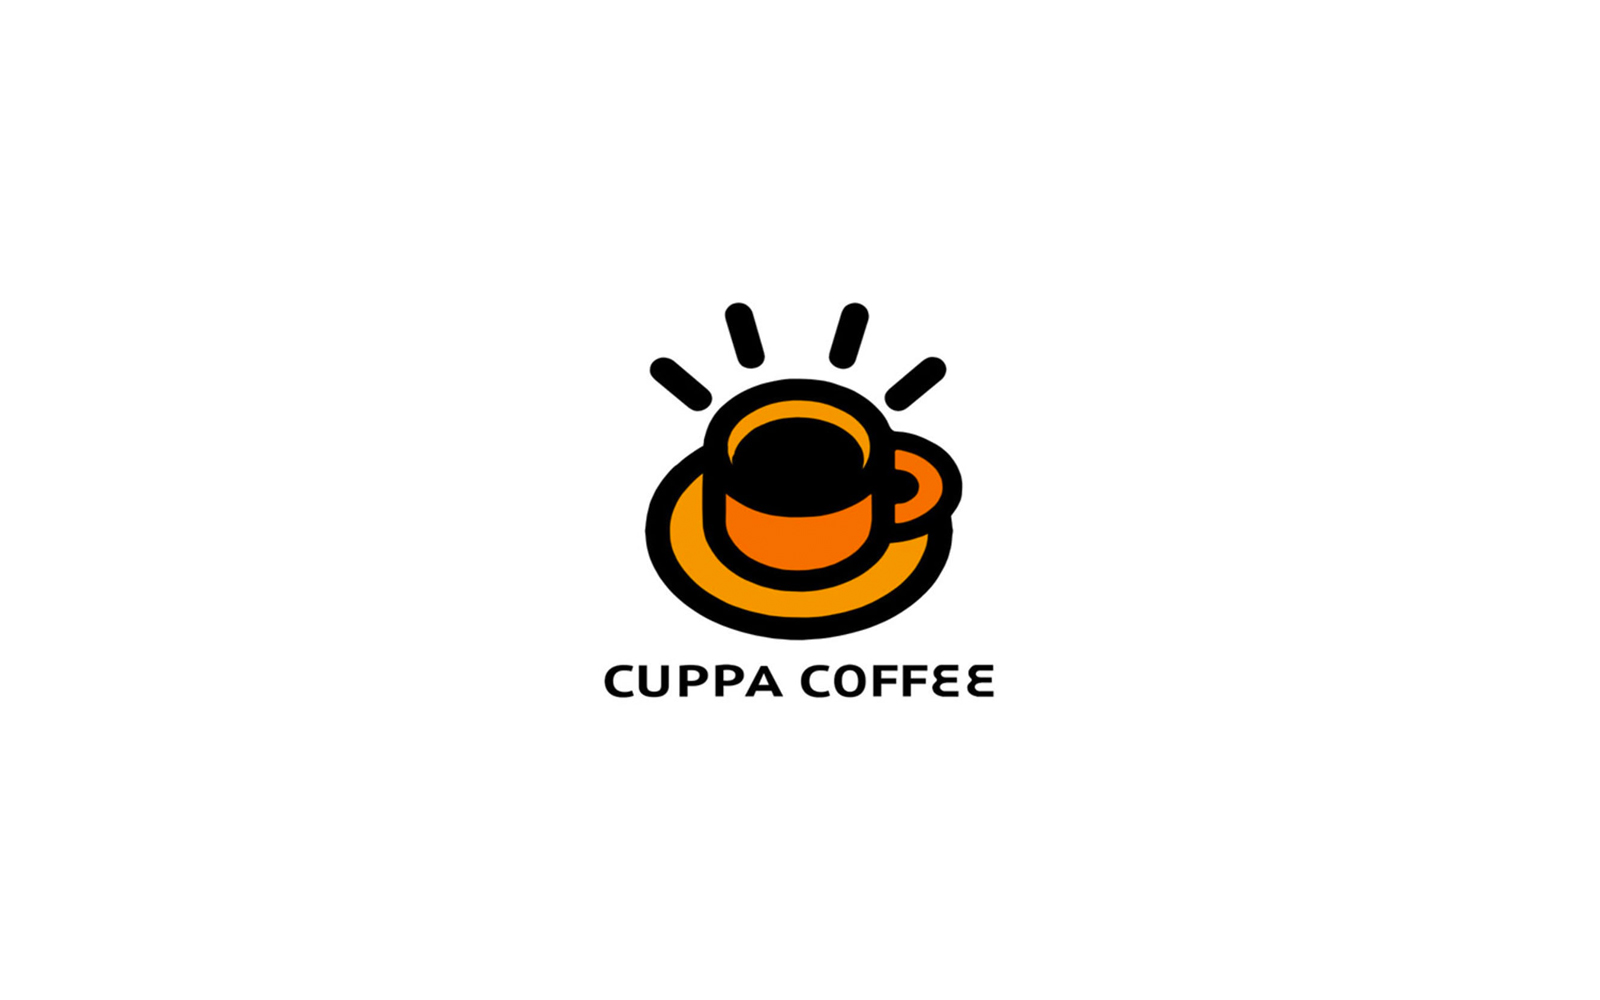 Cuppa Coffee Studios